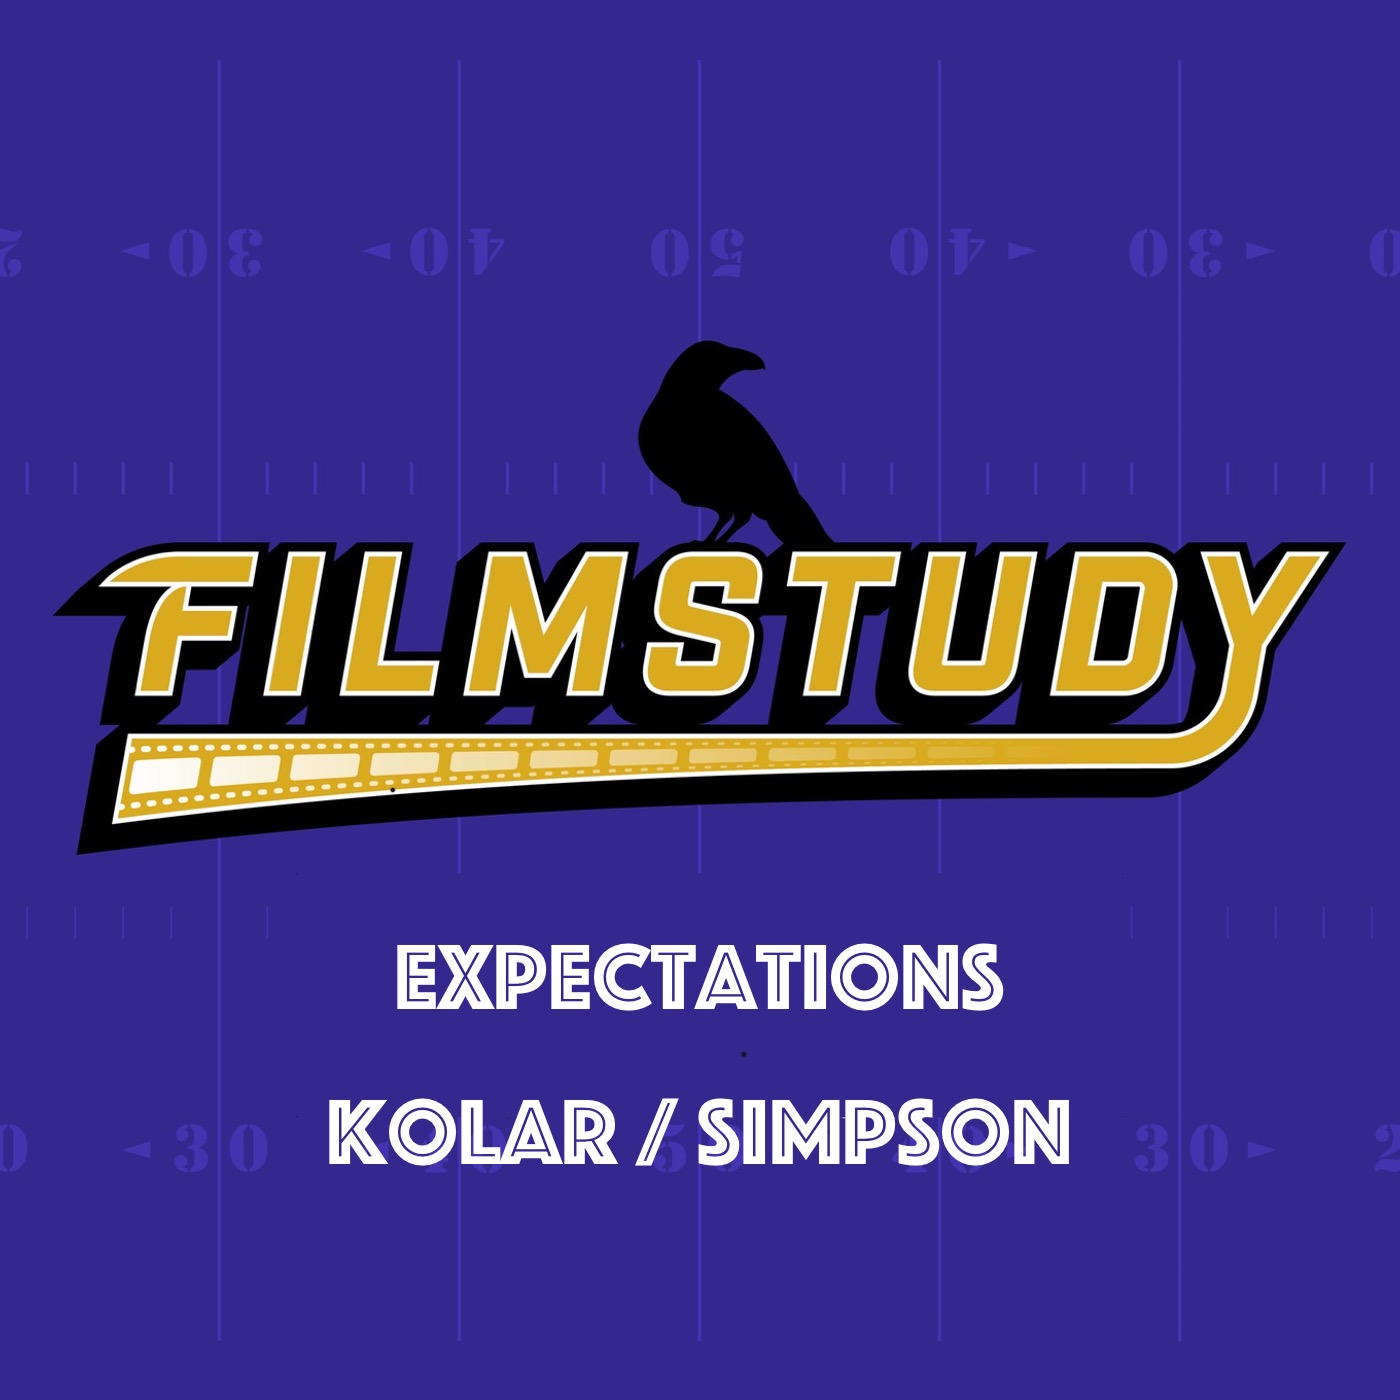 Expectations Kolar / Simpson